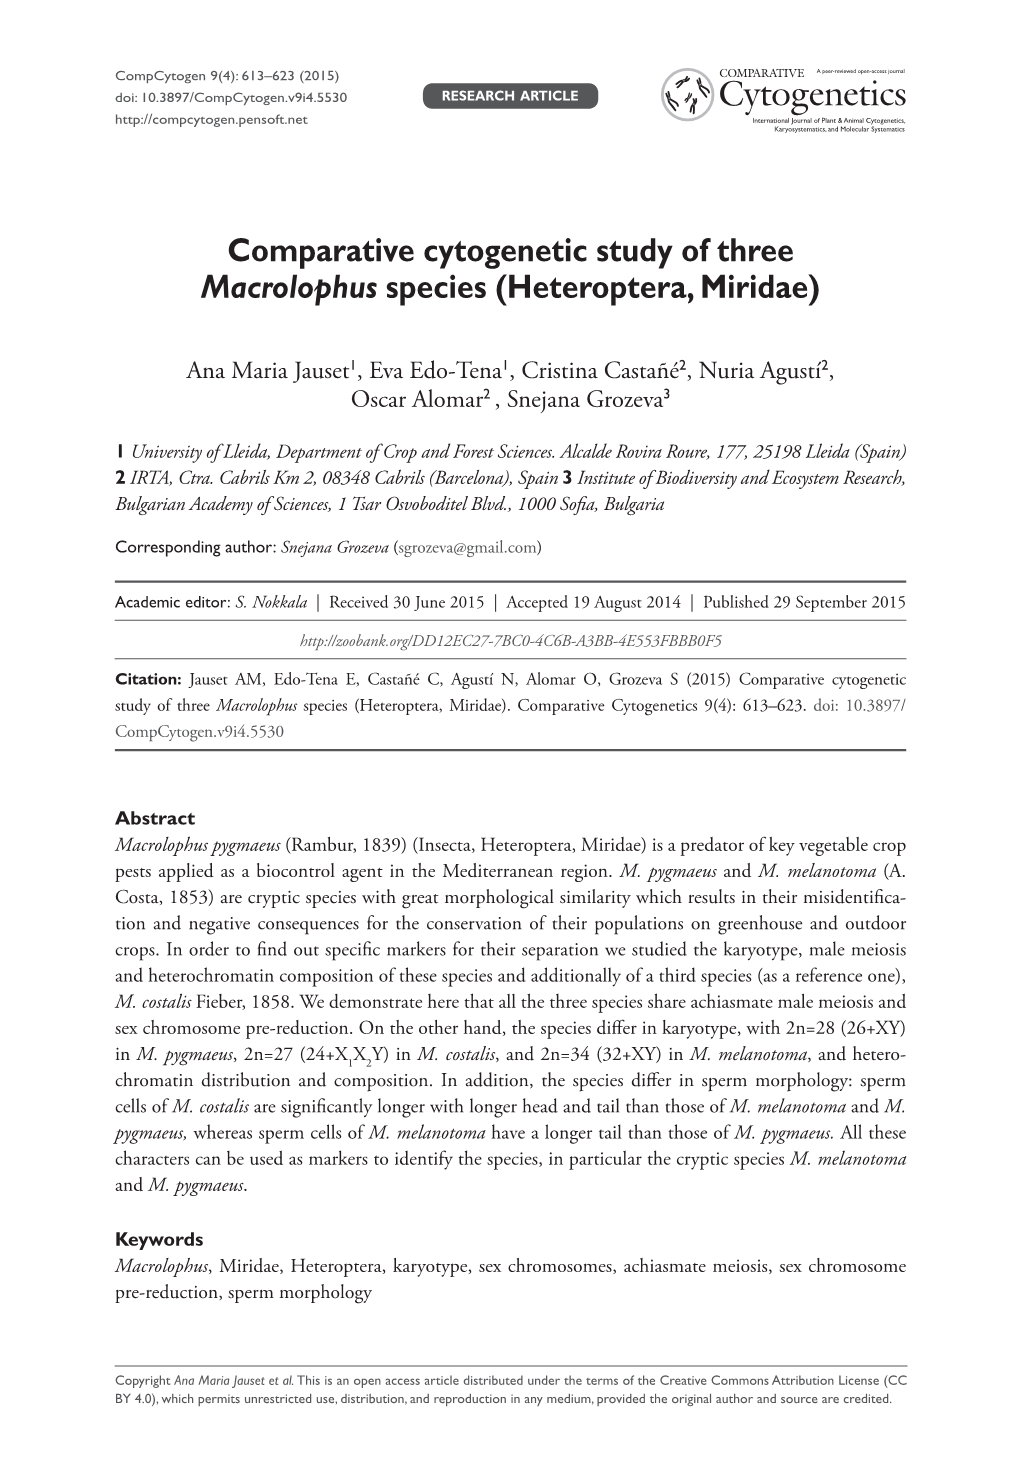 ﻿Comparative Cytogenetic Study of Three Macrolophus Species